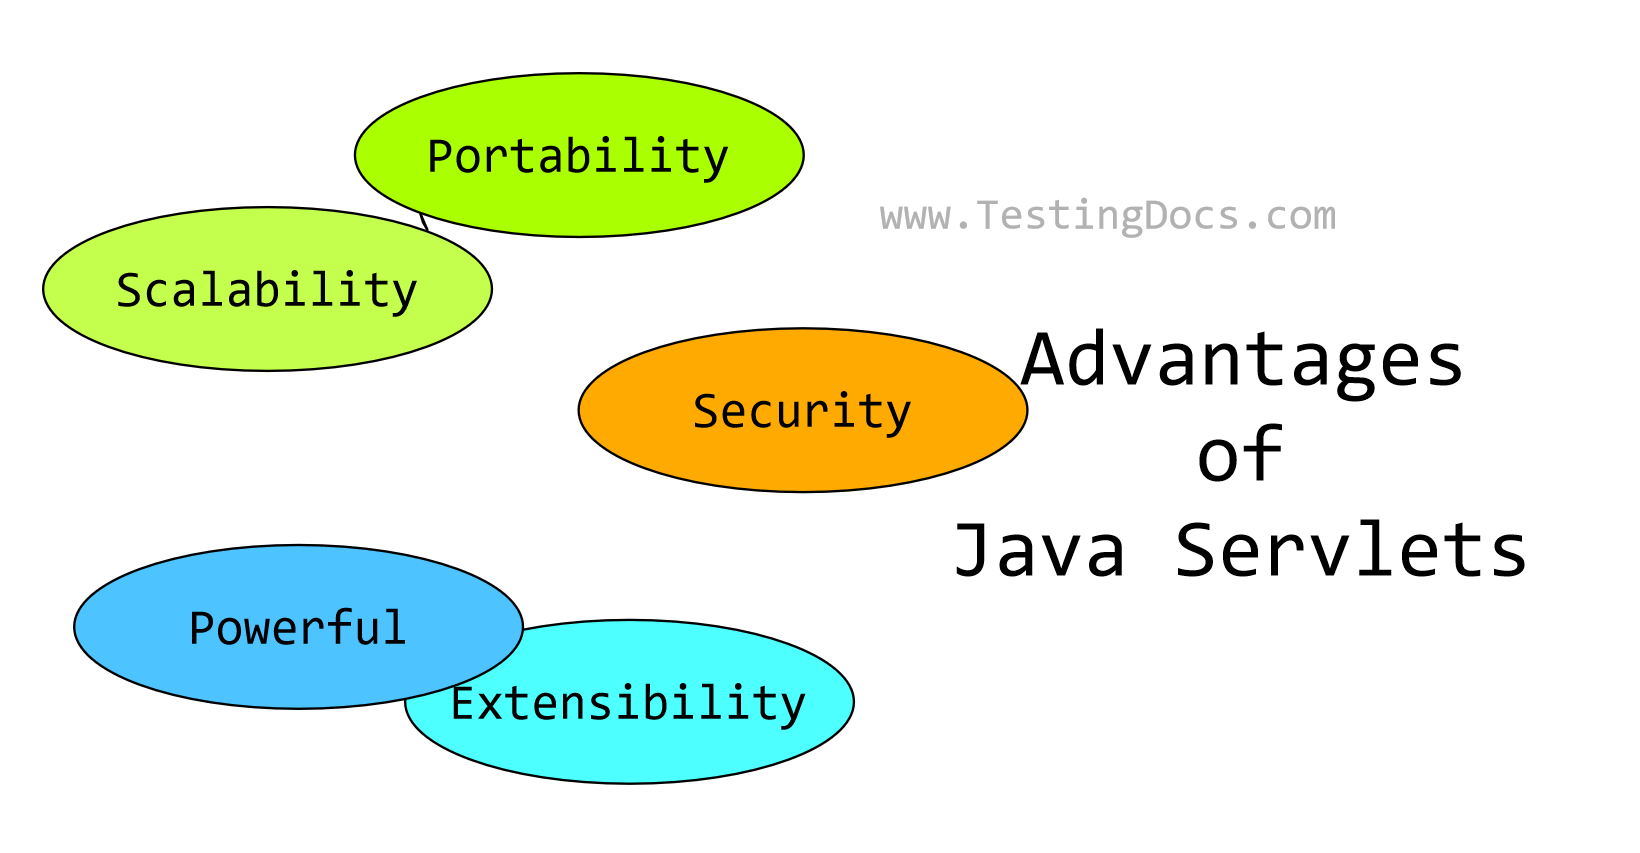 Advantages of Java Servlets